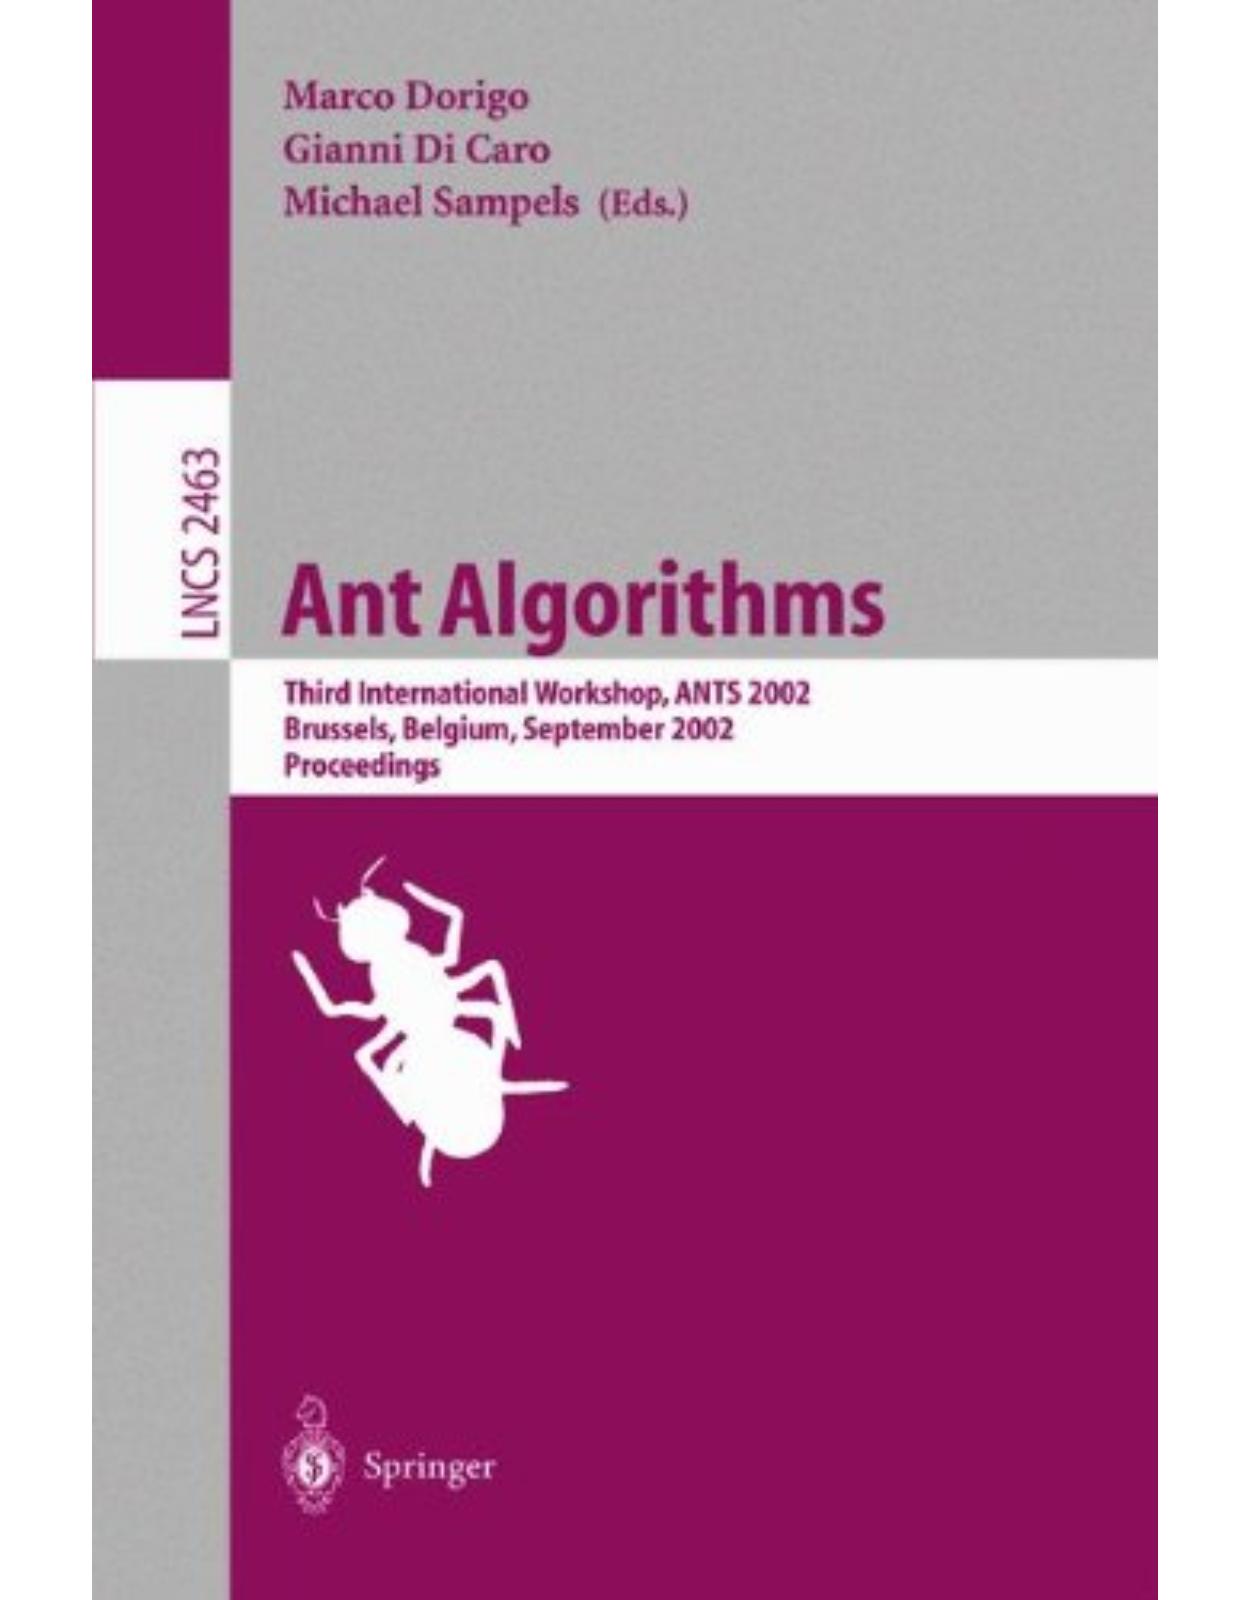 Ant Algorithms: Third International Workshop, ANTS 2002, Brussels, Belgium, September 12-14, 2002. Proceedings (Lecture Notes in Computer Science)